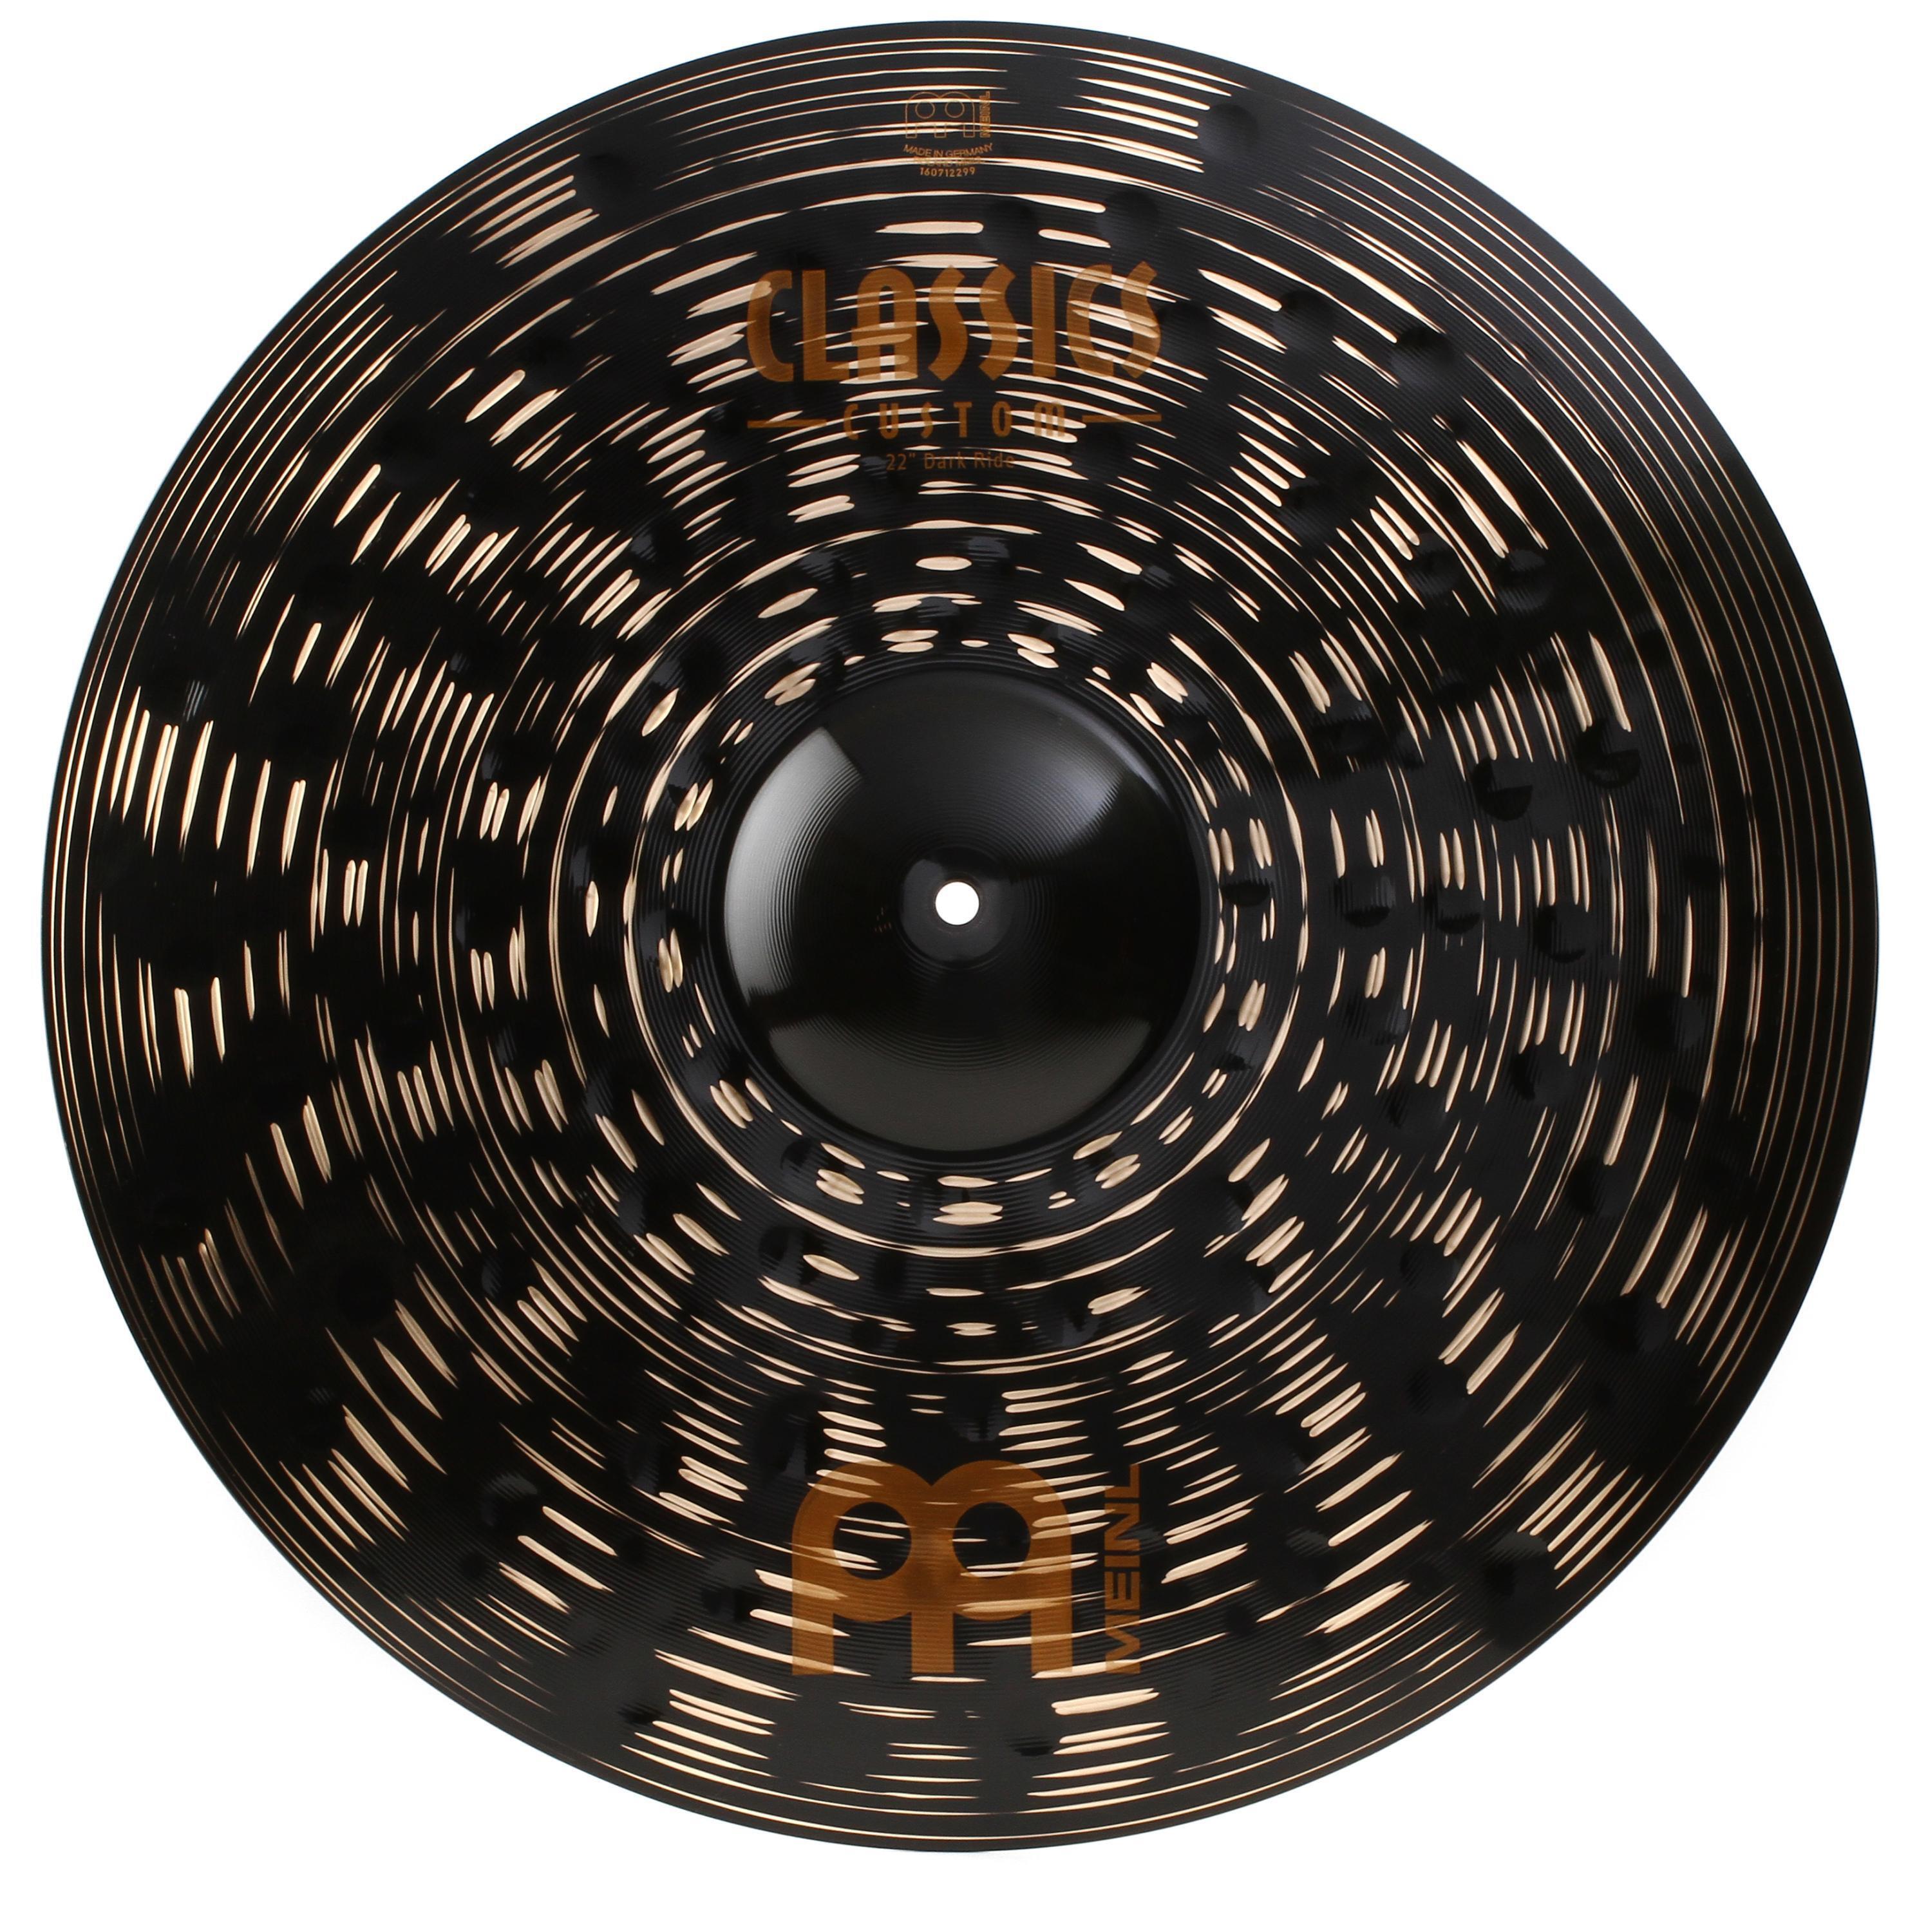 Meinl Cymbals 22 inch Classics Custom Dark Ride Cymbal